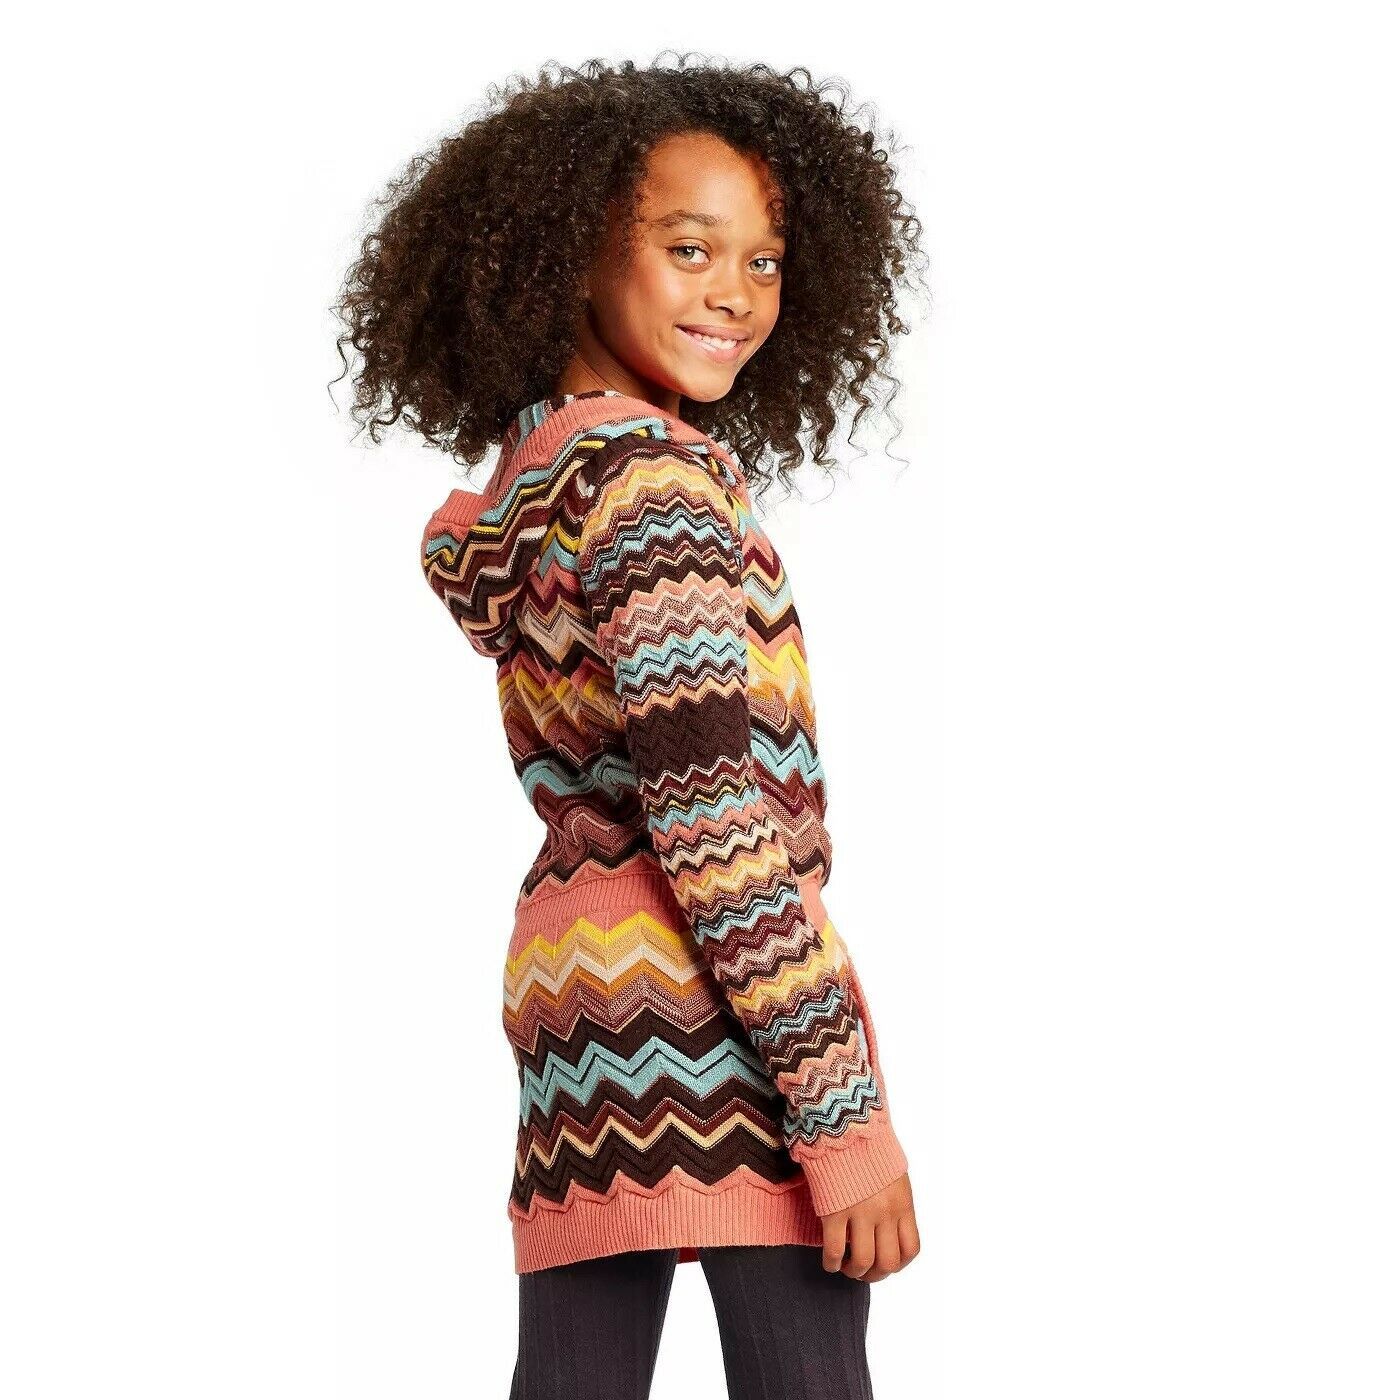 Missoni for Target Girls Knit Hoodie Sweater Jacket w pockets - Orange Chevron - $50.00